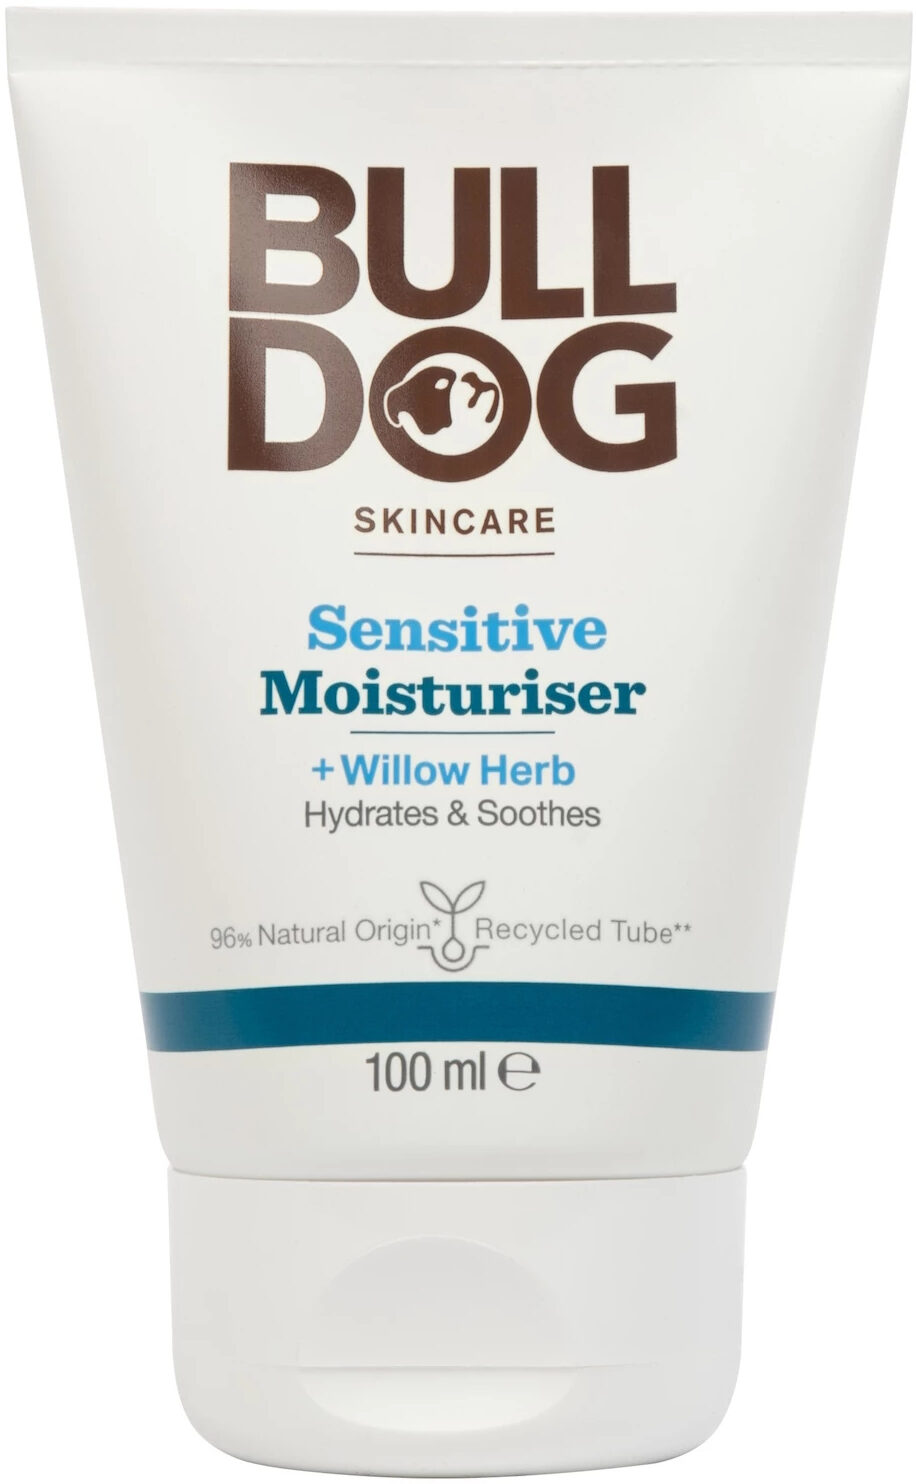 Sensitive moisturiser - Tuote - en